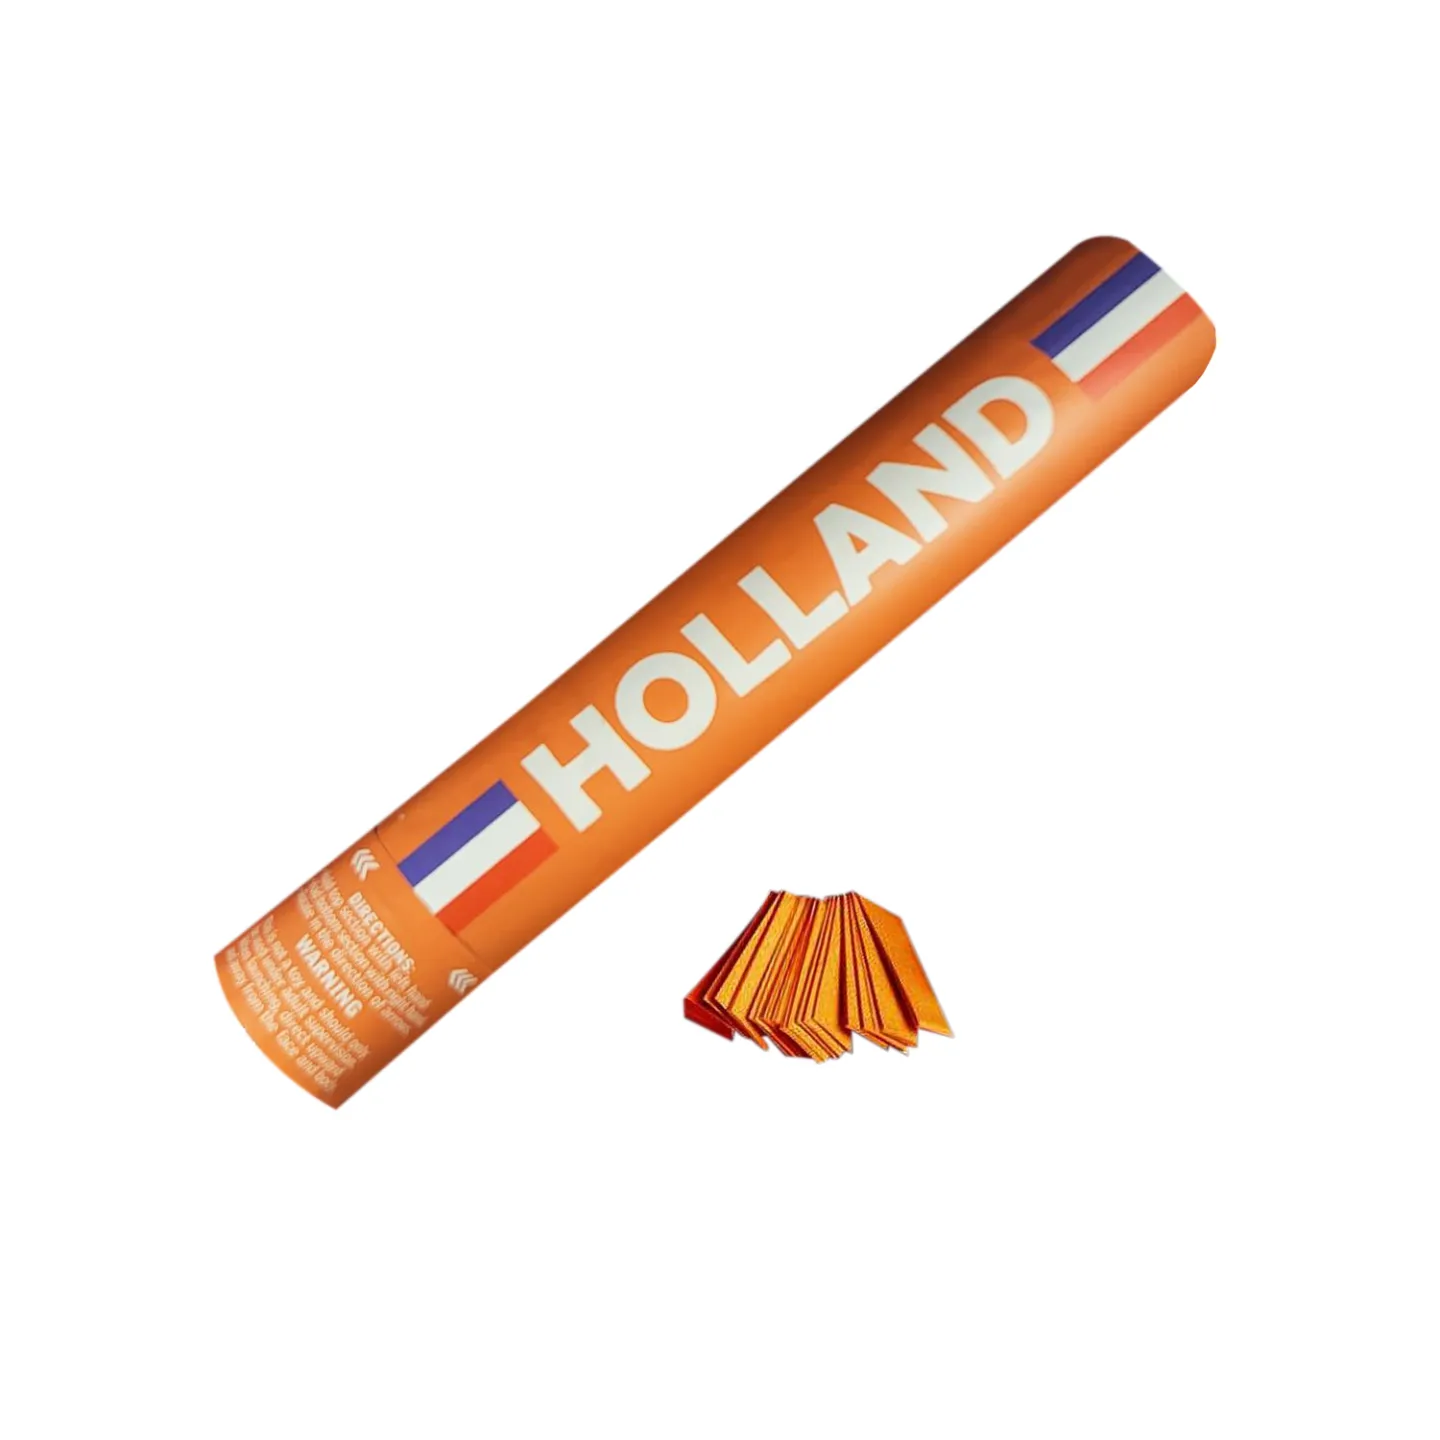 Koningsdag budget confetti kanon Holland 30cm.